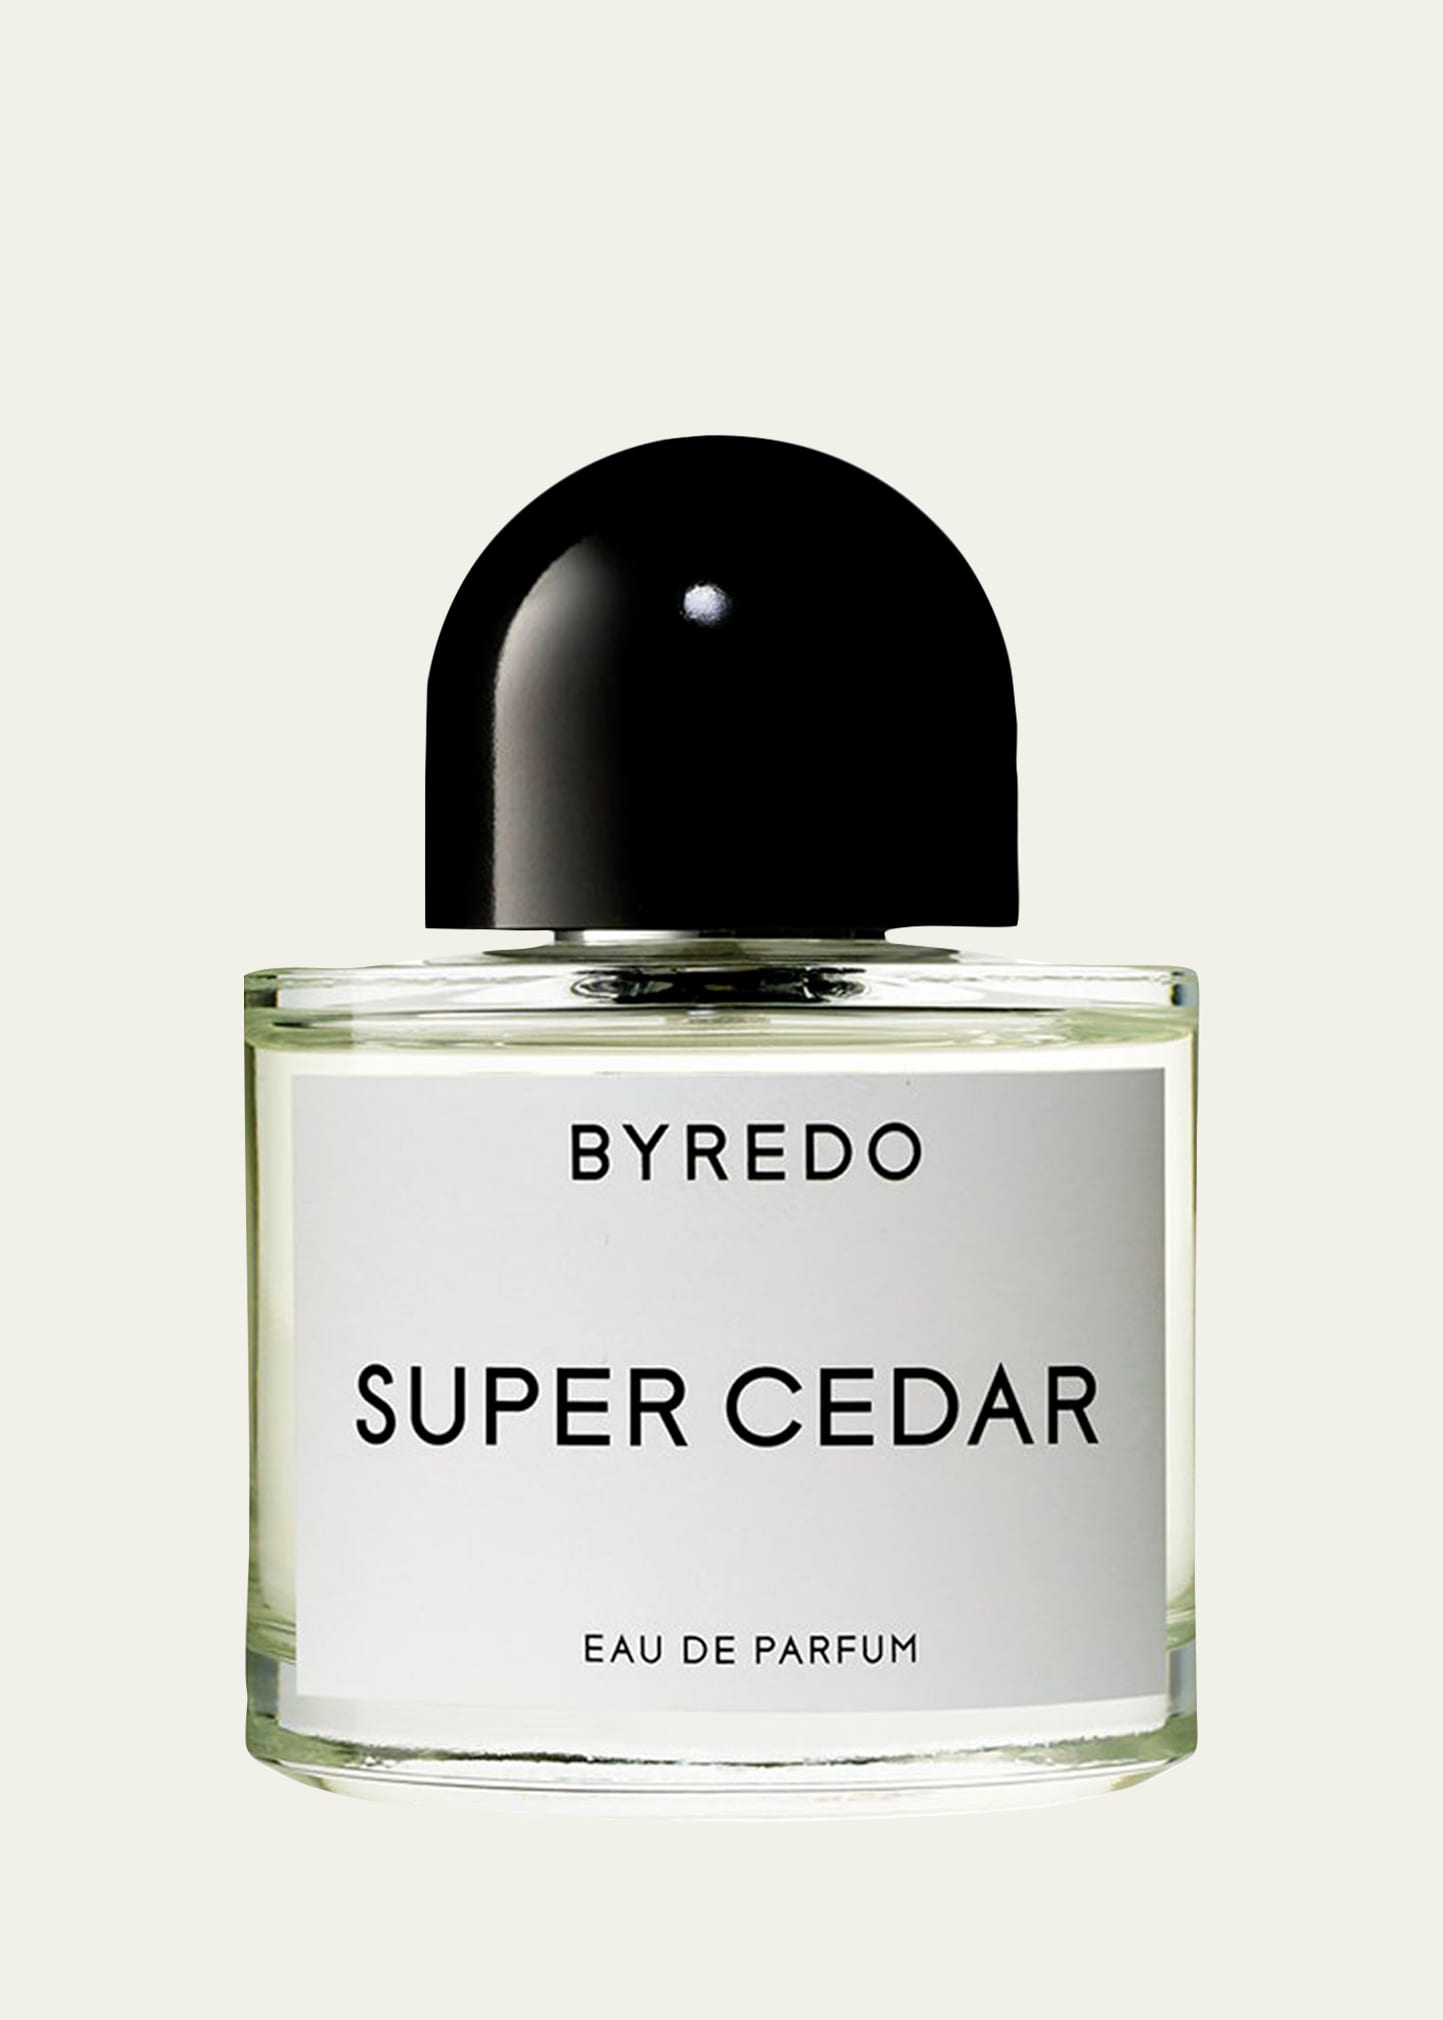 Super Cedar Eau de Parfum, 1.7 oz.